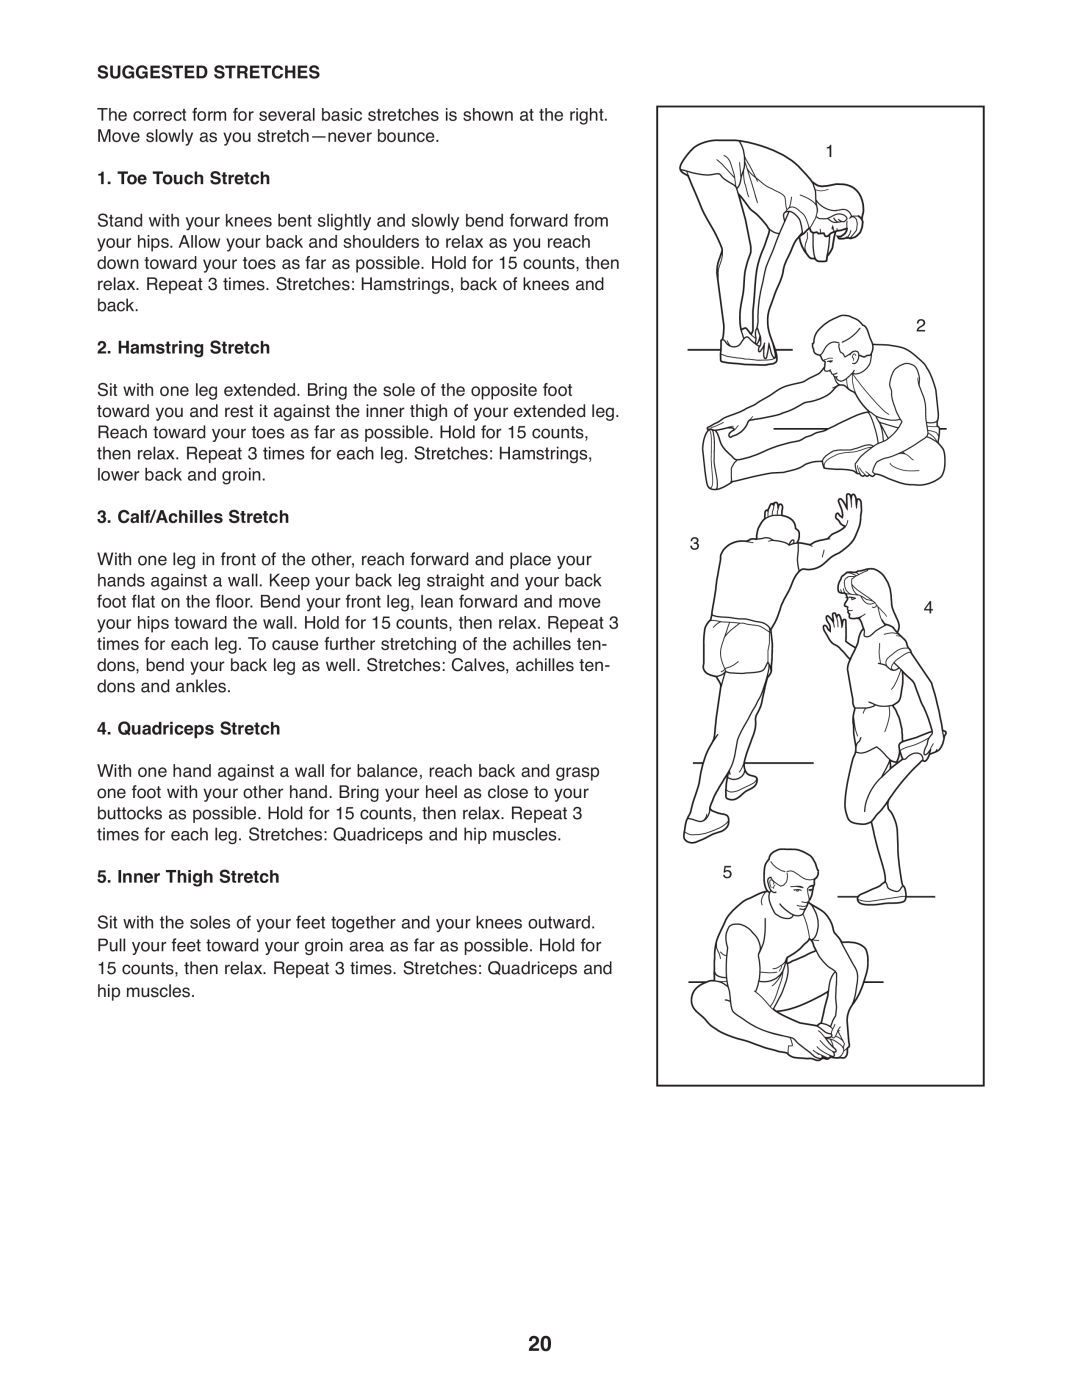 ProForm PFEL5905.0 Suggested Stretches, Toe Touch Stretch, Hamstring Stretch, Calf/Achilles Stretch, Quadriceps Stretch 